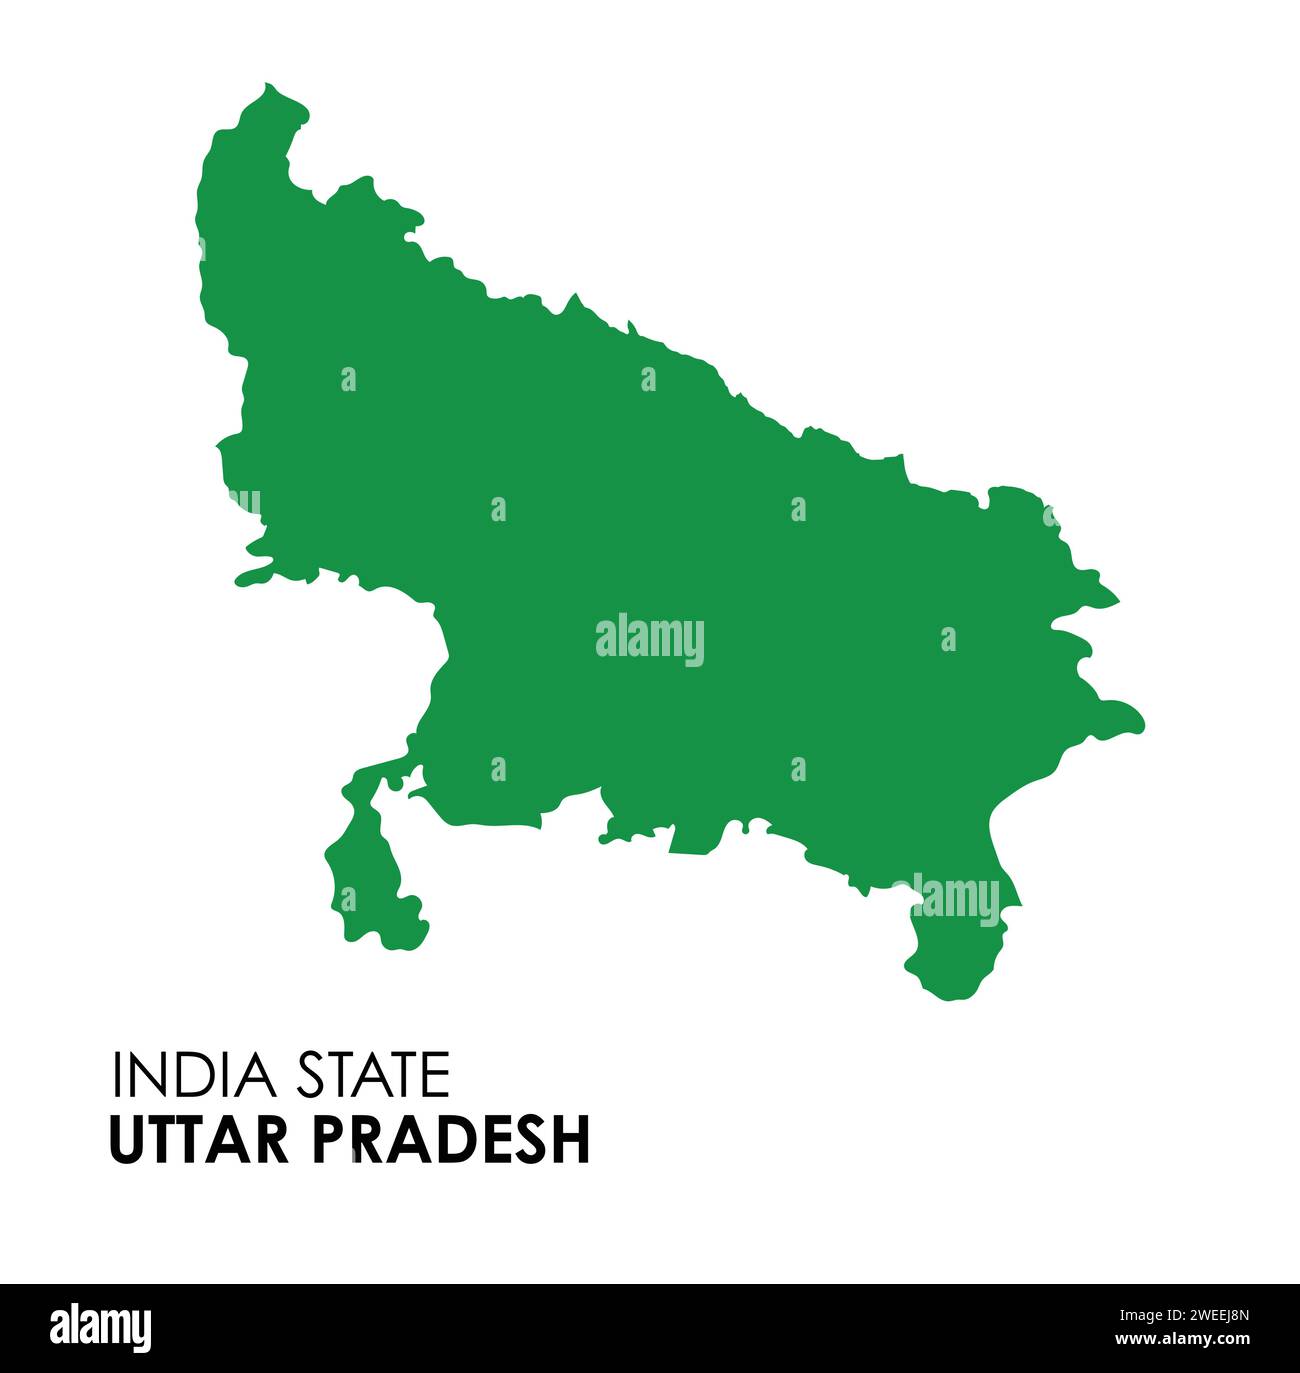 Carte de l'état indien de l'Uttar Pradesh. Illustration vectorielle de carte Uttar Pradesh. Fond blanc. Illustration de Vecteur